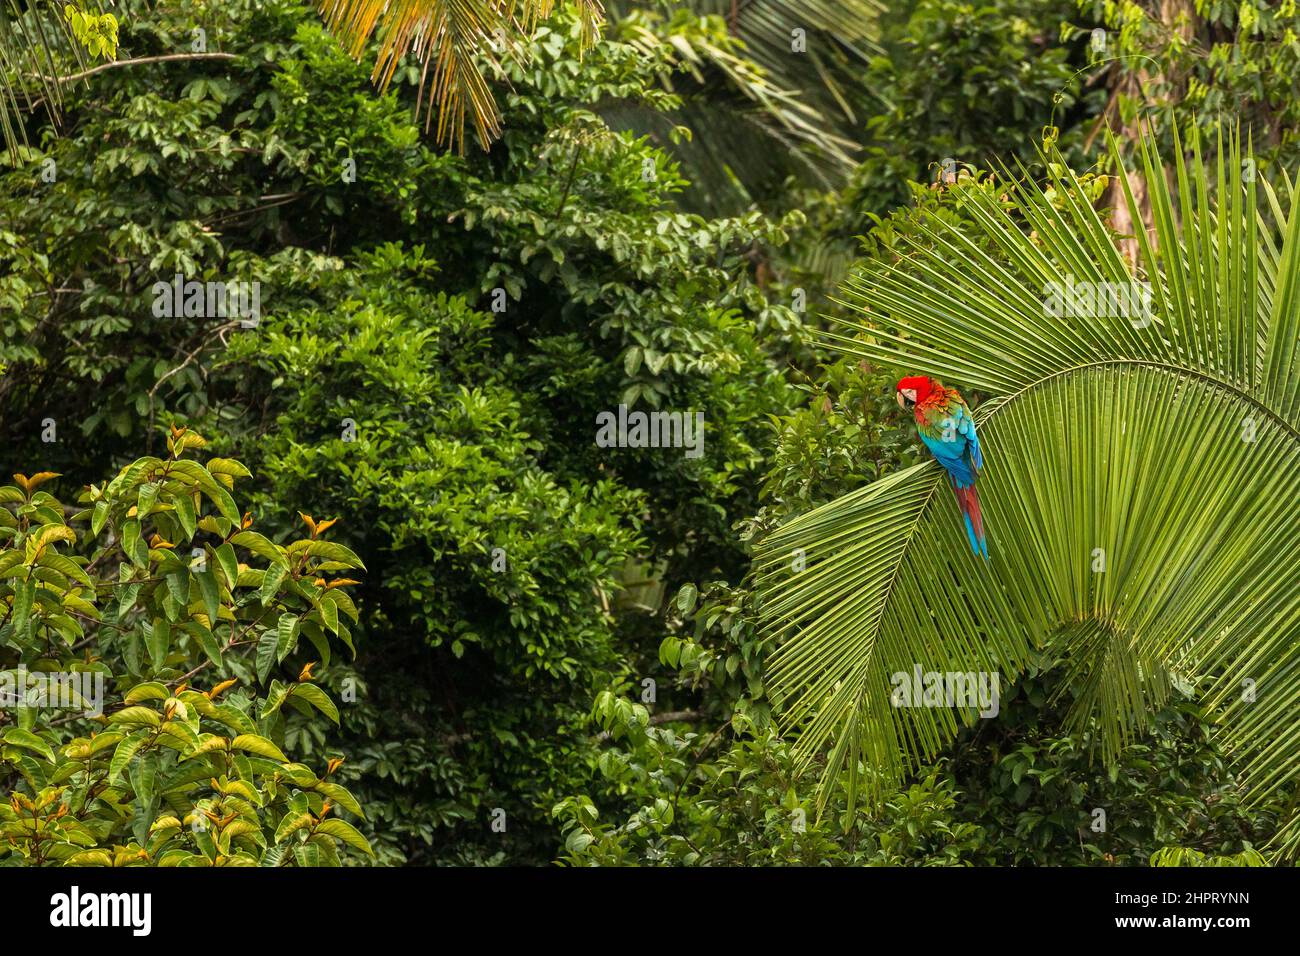 guacamaya de alas verdes sentada en la palma de la palmera en la zona nacional de tambopata manu, perú Foto de stock